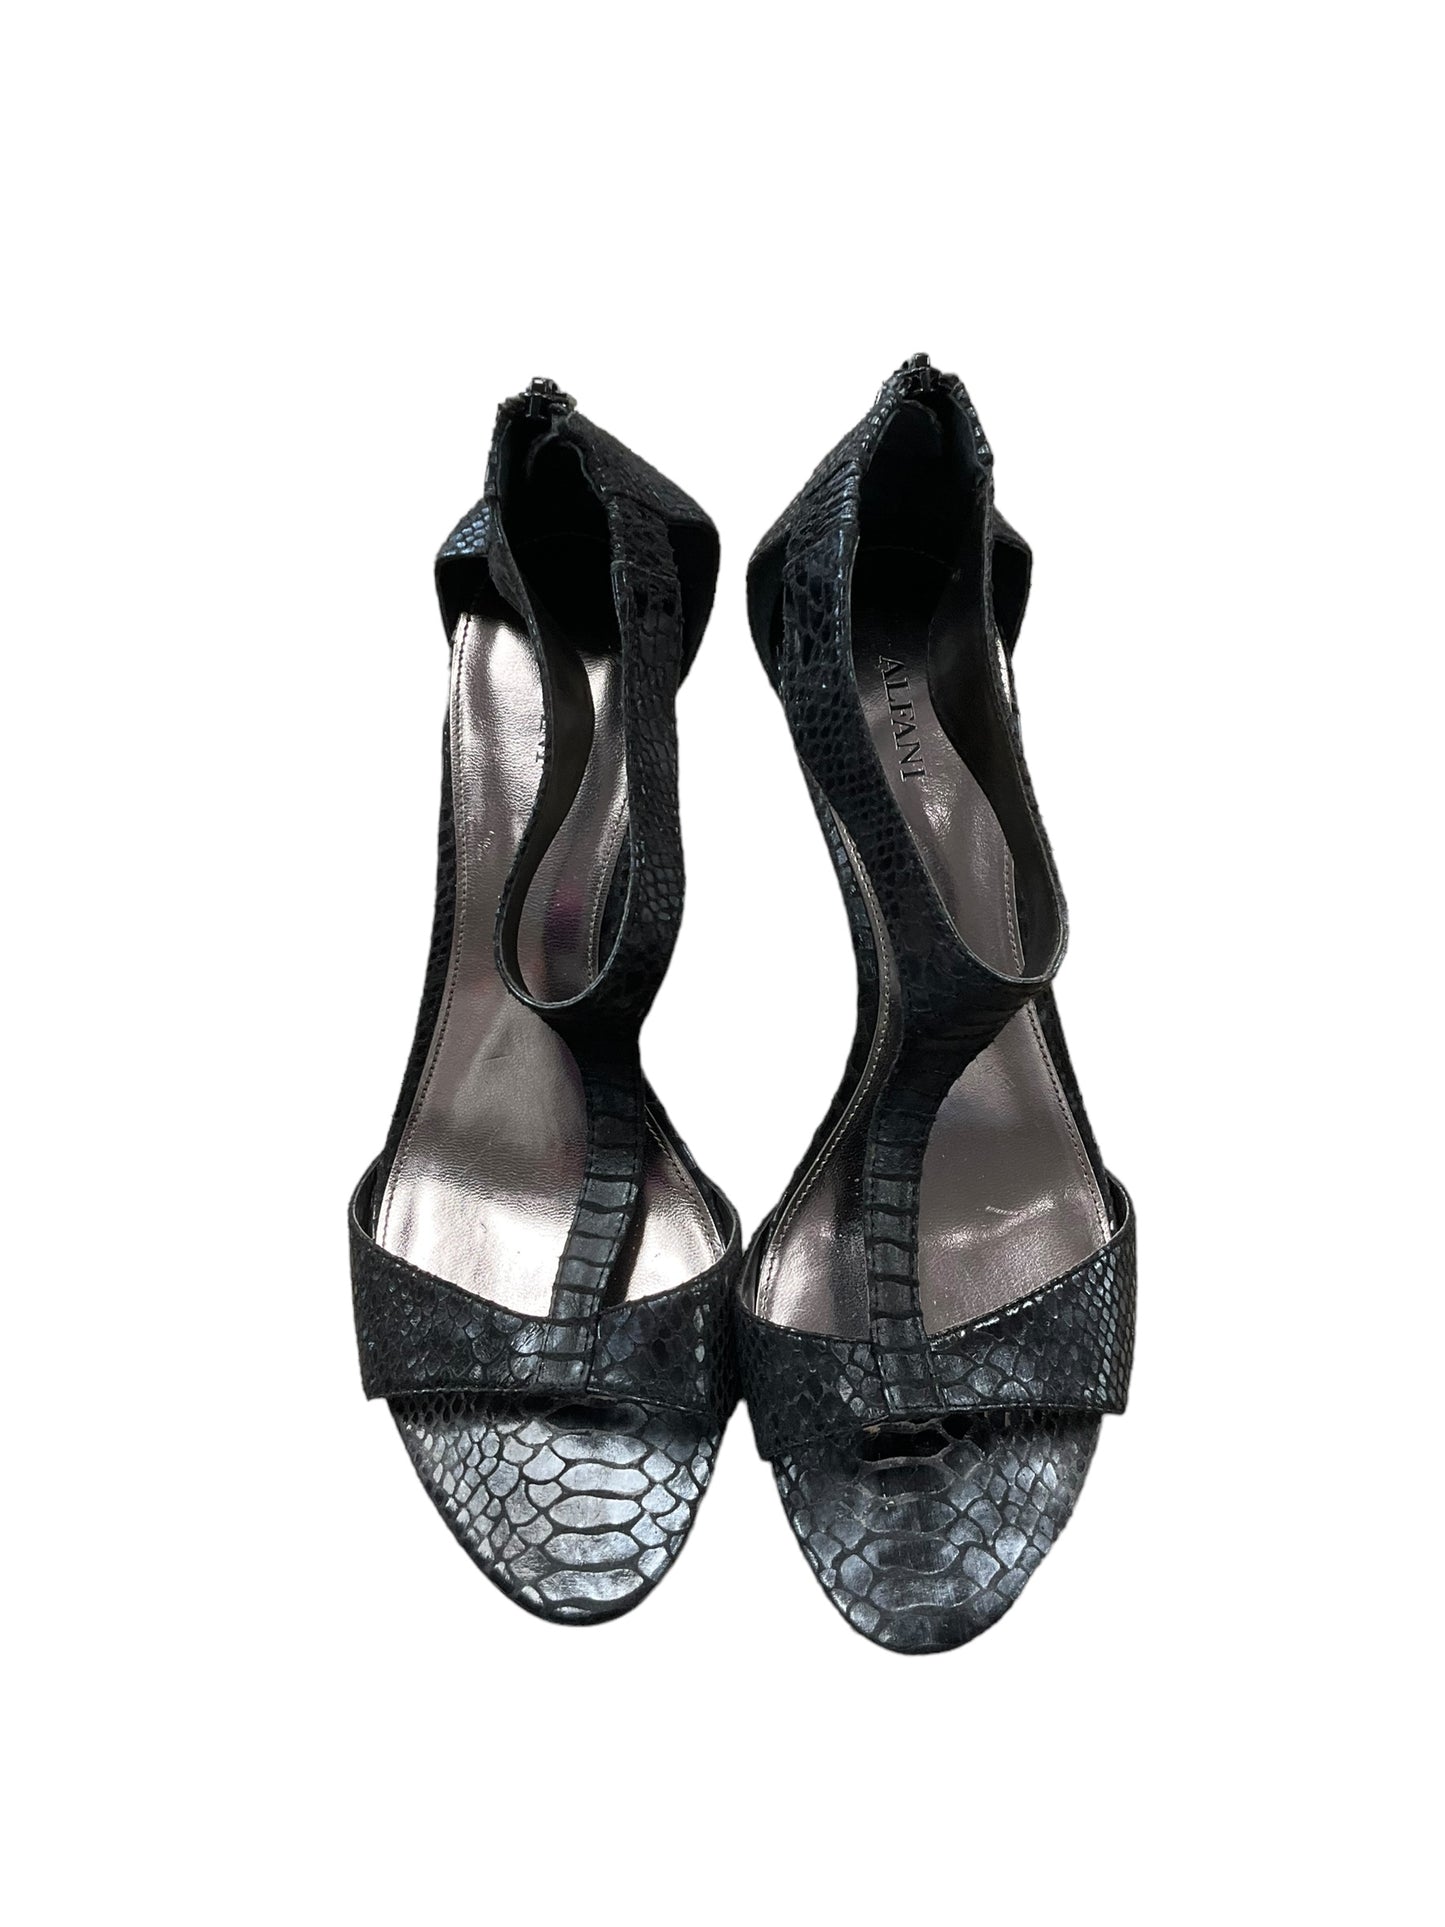 Shoes Heels Stiletto By Alfani  Size: 10